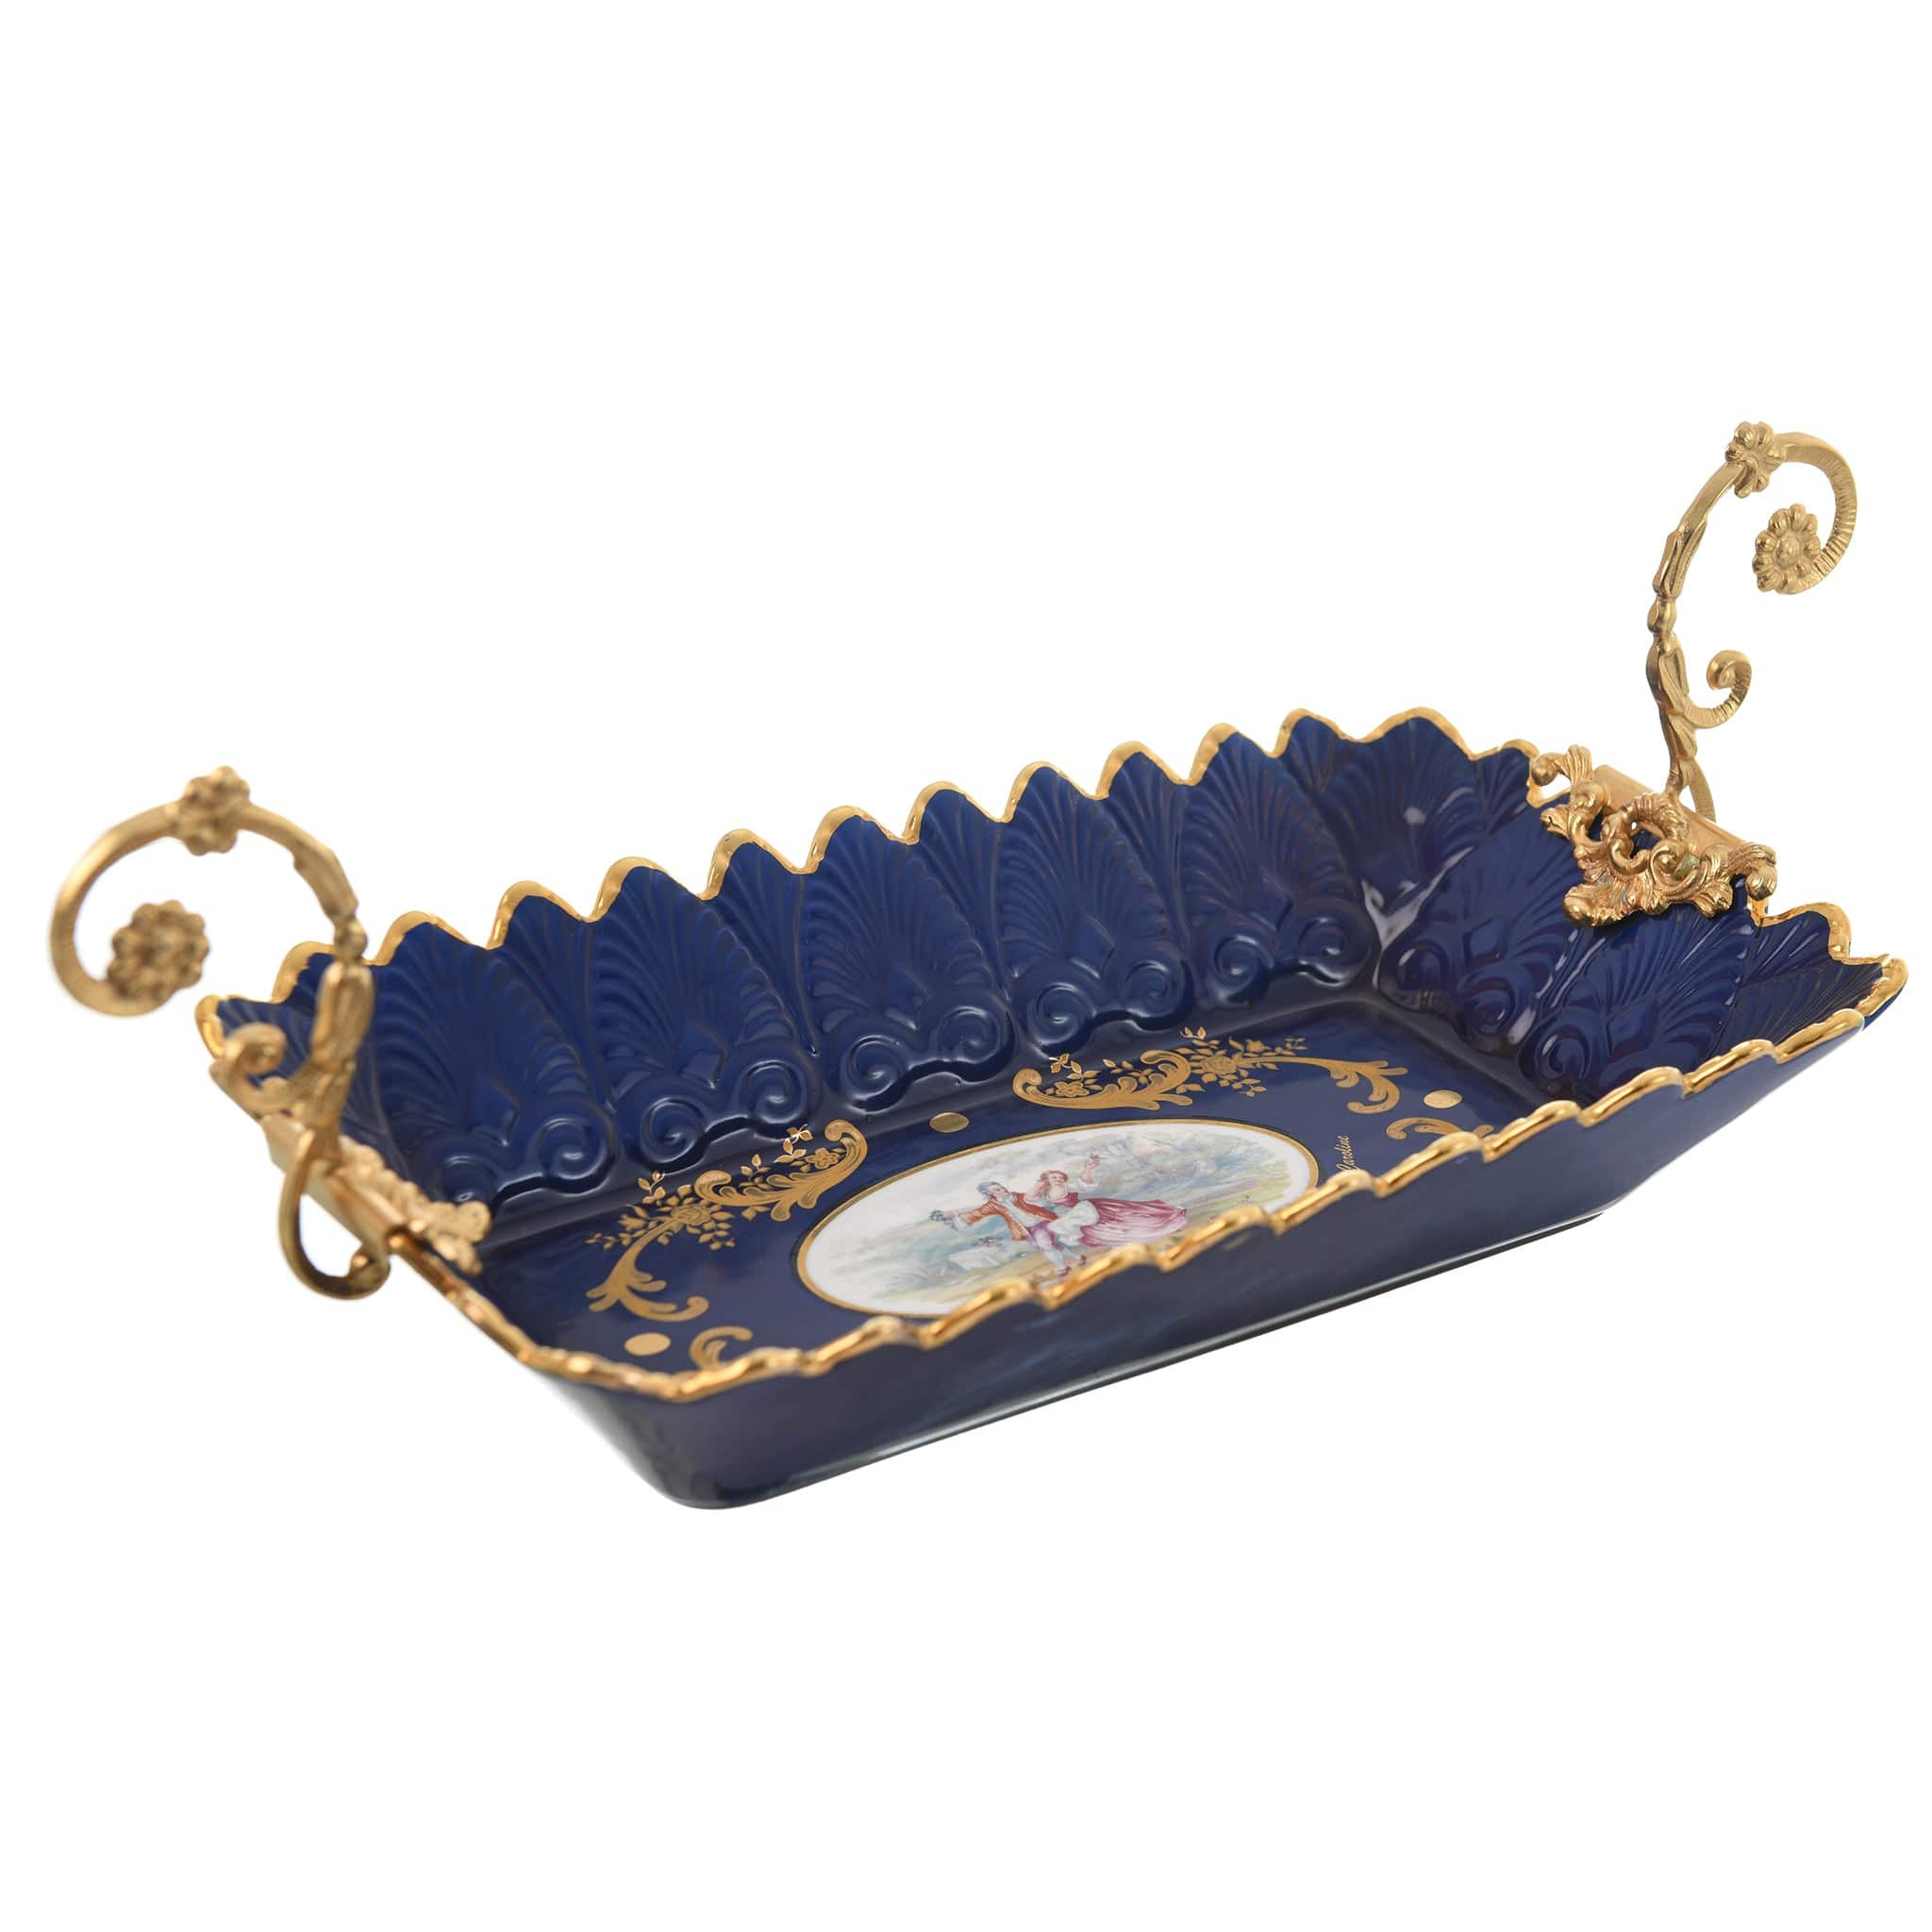 Caroline - Rectangular Plate with Gold Plated Handles - Romeo & Juliet - Blue & Gold - 39x18cm - 58000617